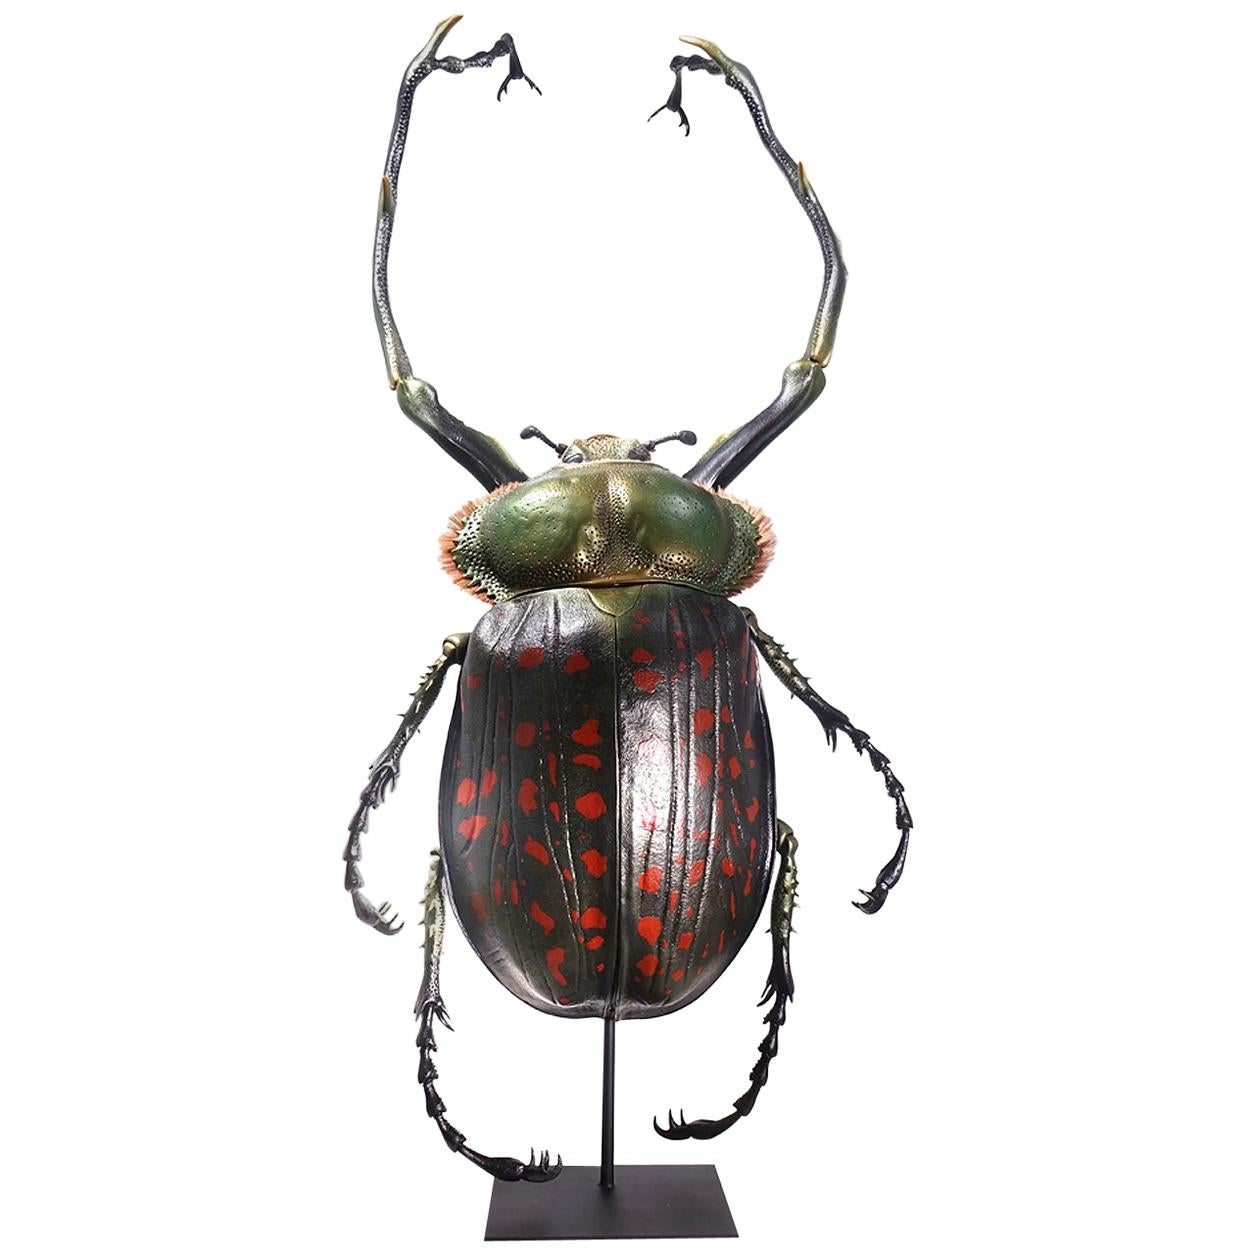 Museum Model of a Cheirotonus Long-Armed Beetle